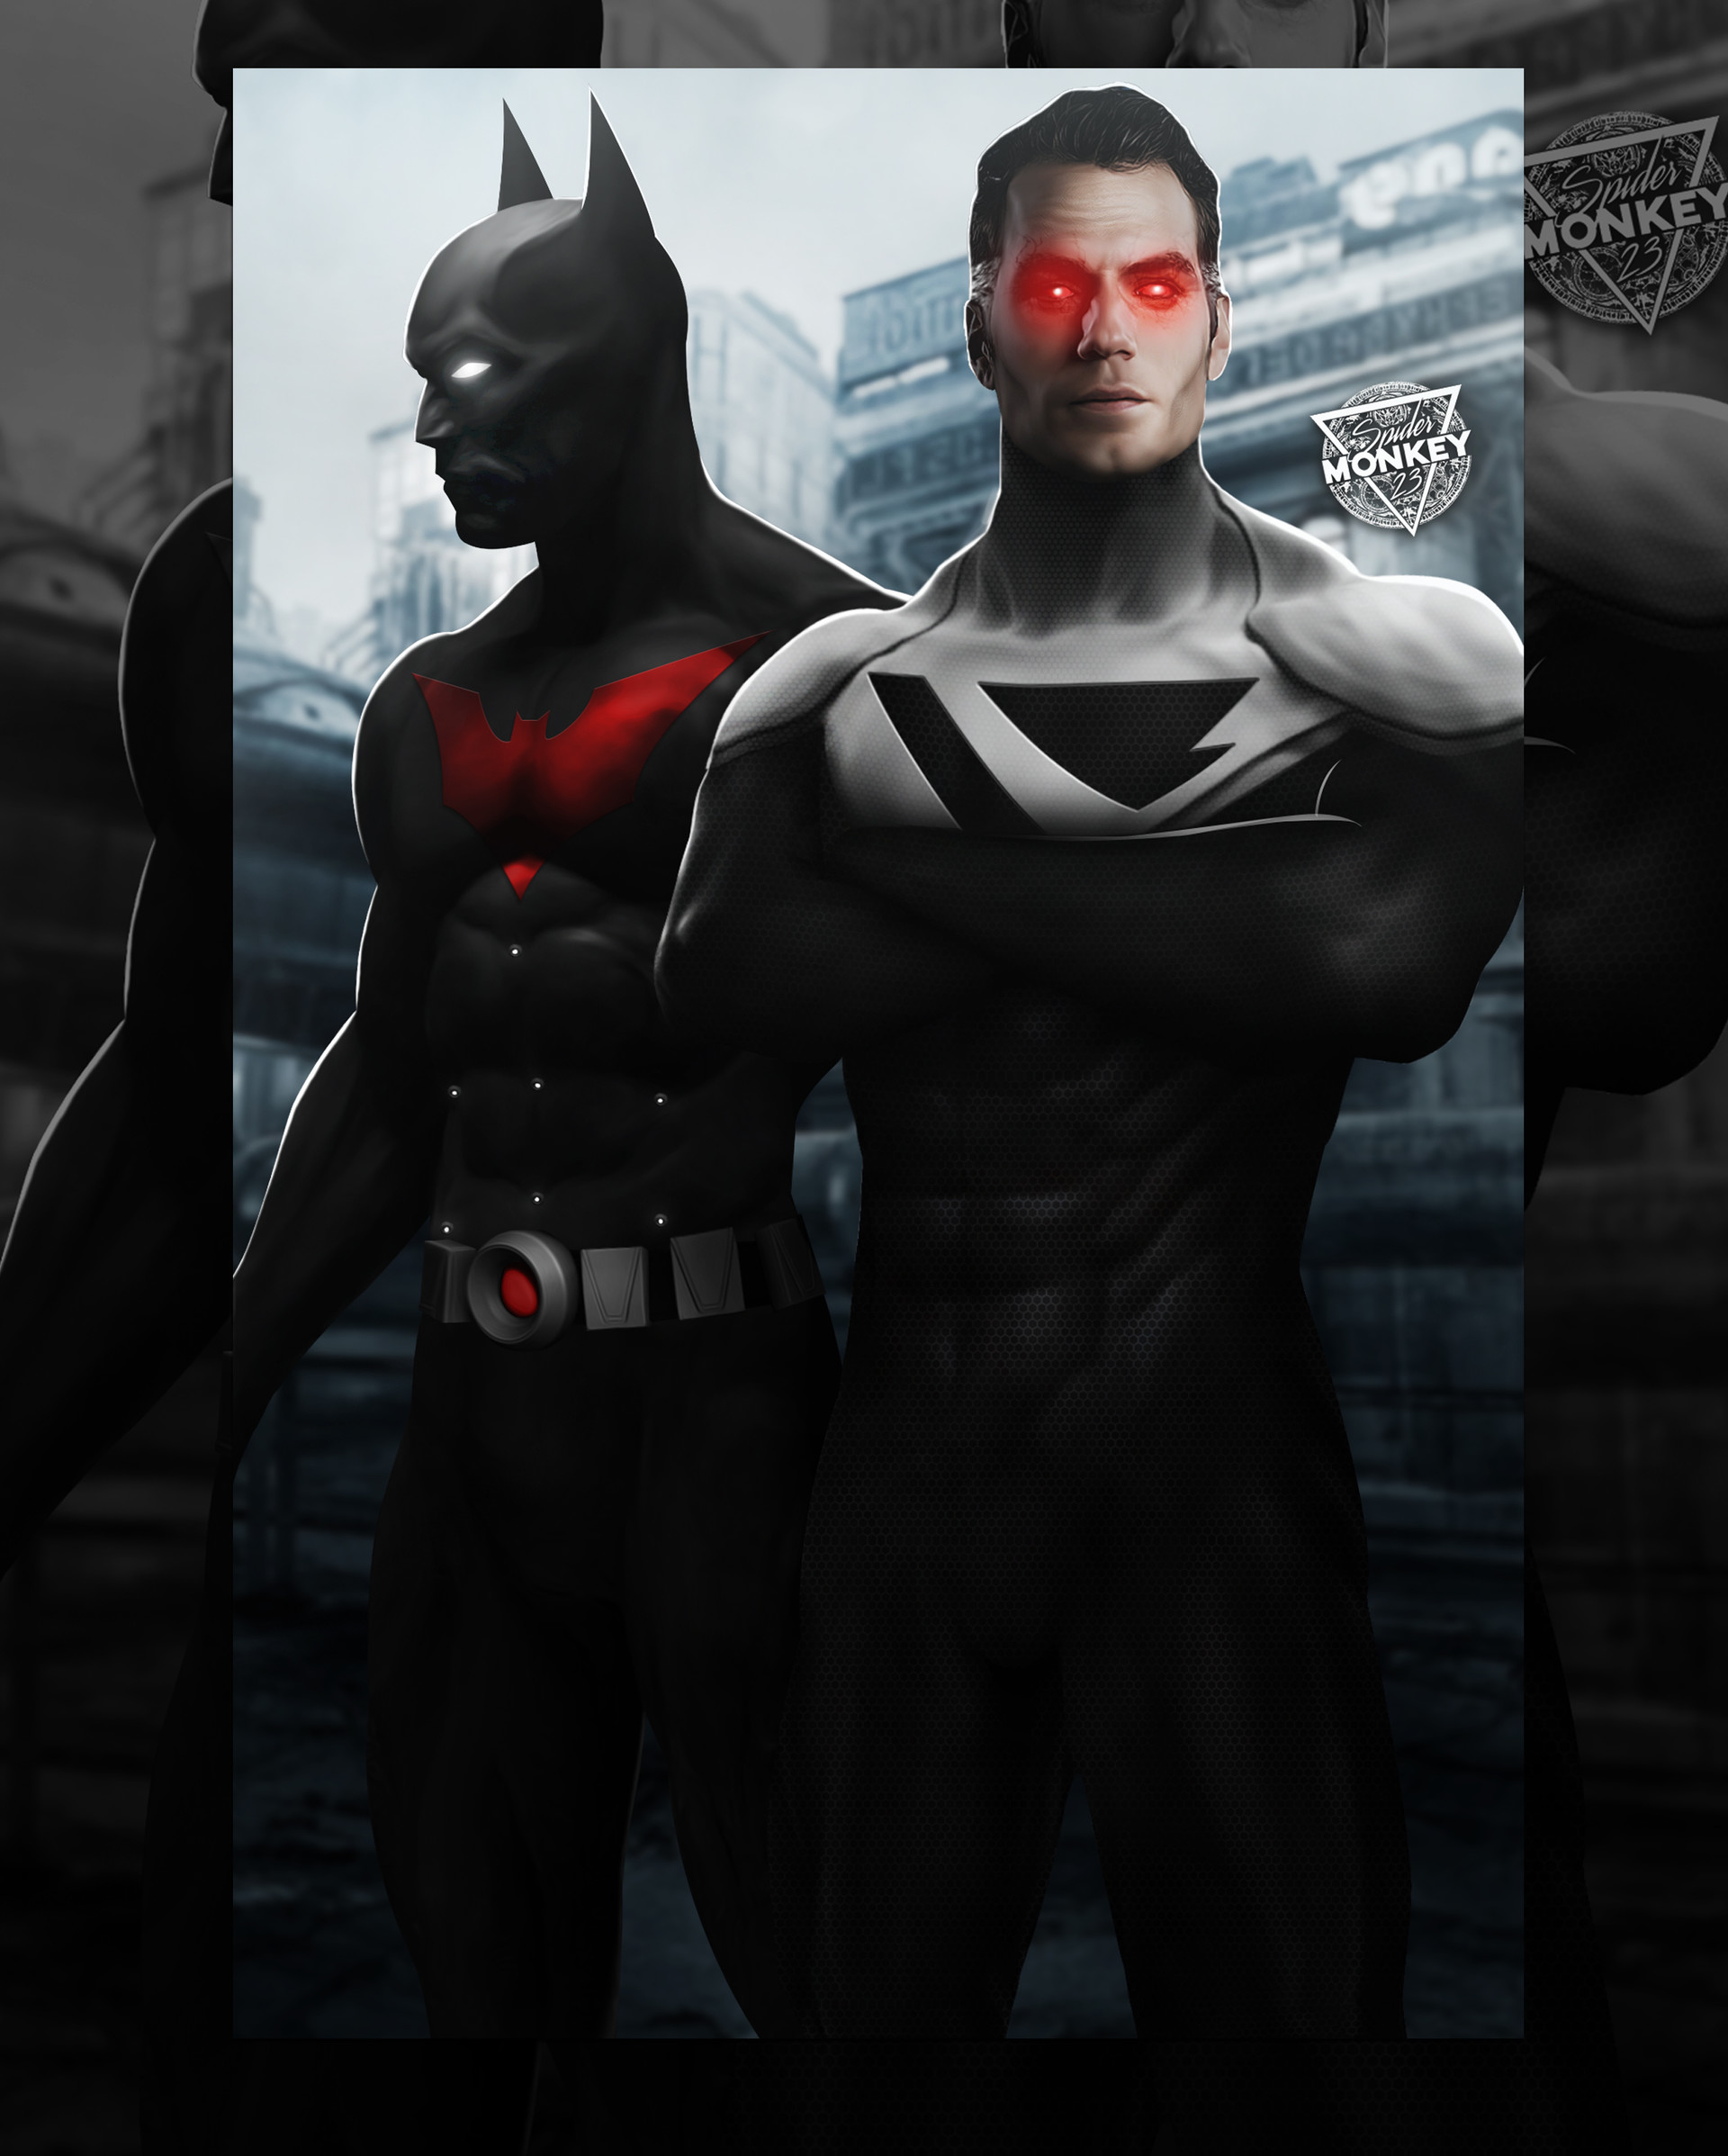 ArtStation - Superman and batman beyond